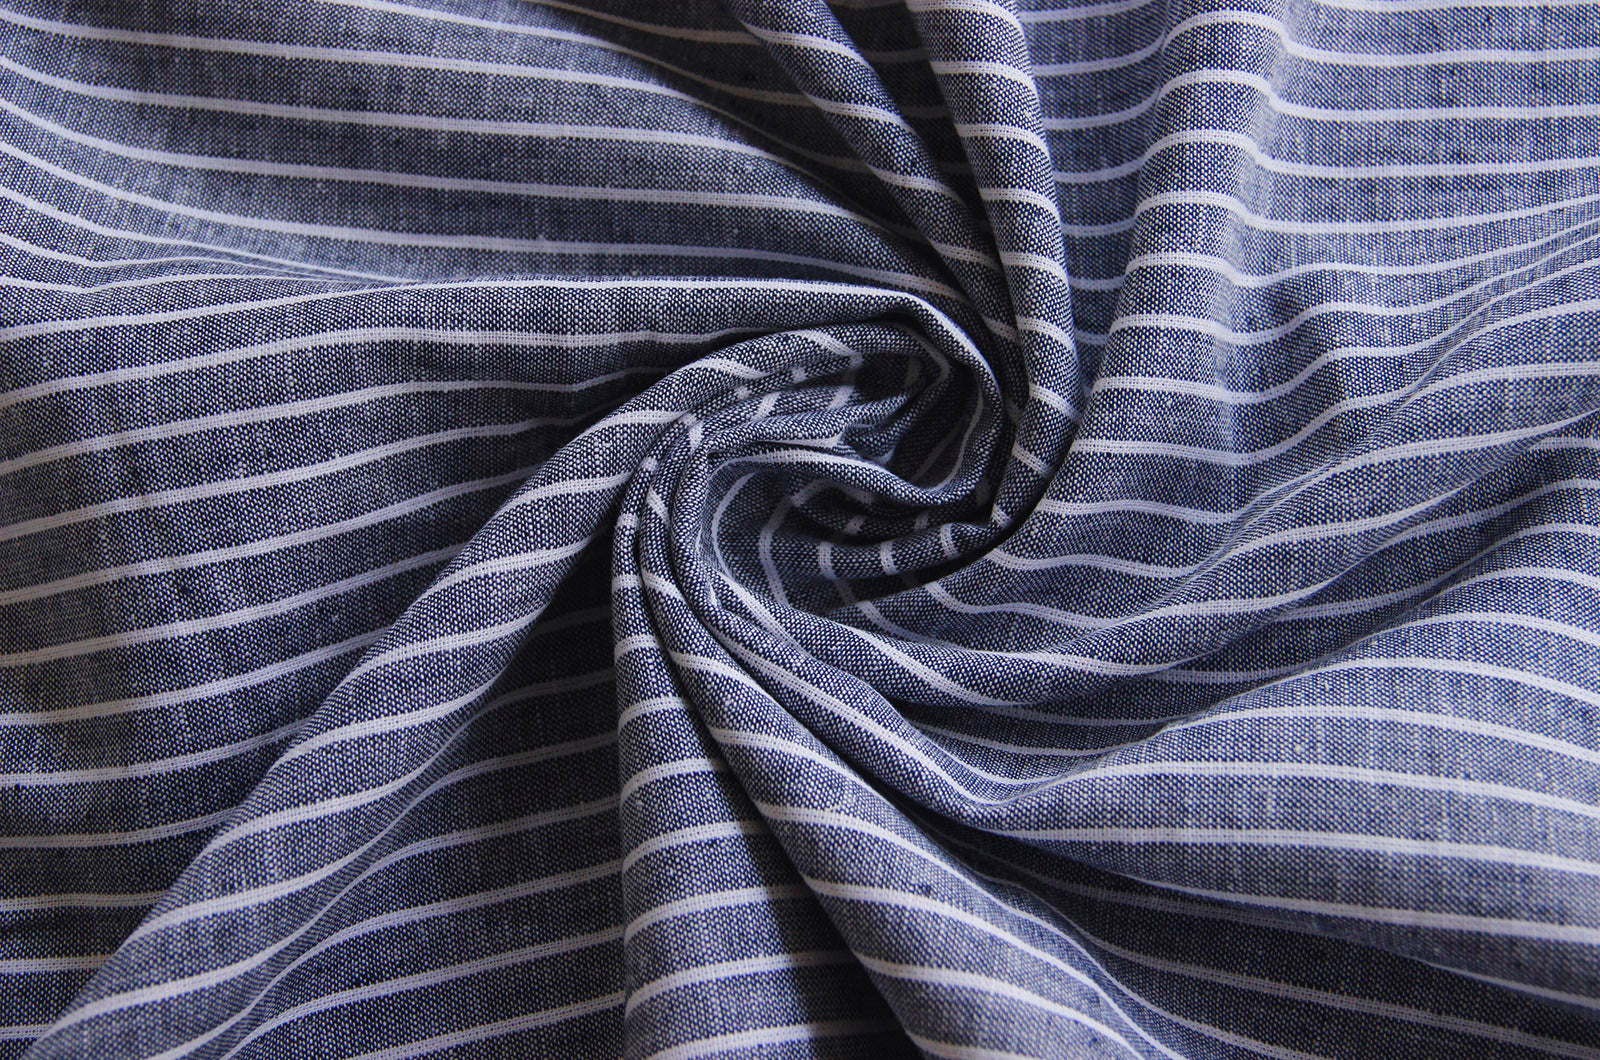 Half linen patterned stripes * From 50 cm